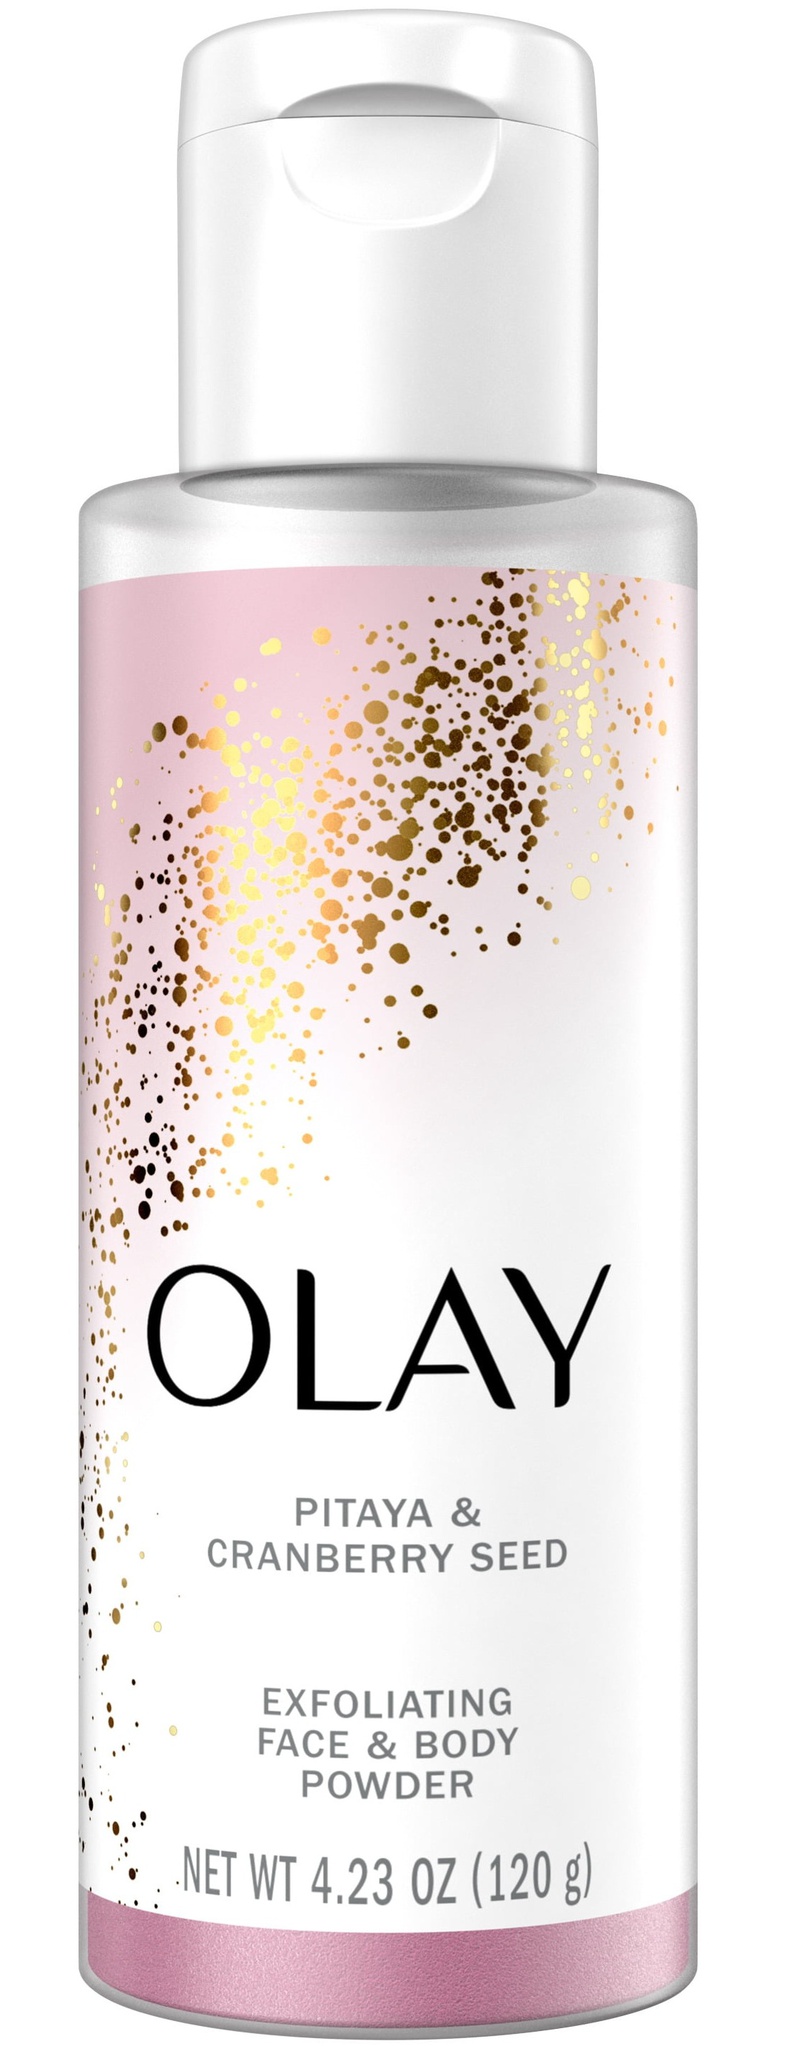 Olay Pitaya & Cranberry Seed Exfoliating Face & Body Powder